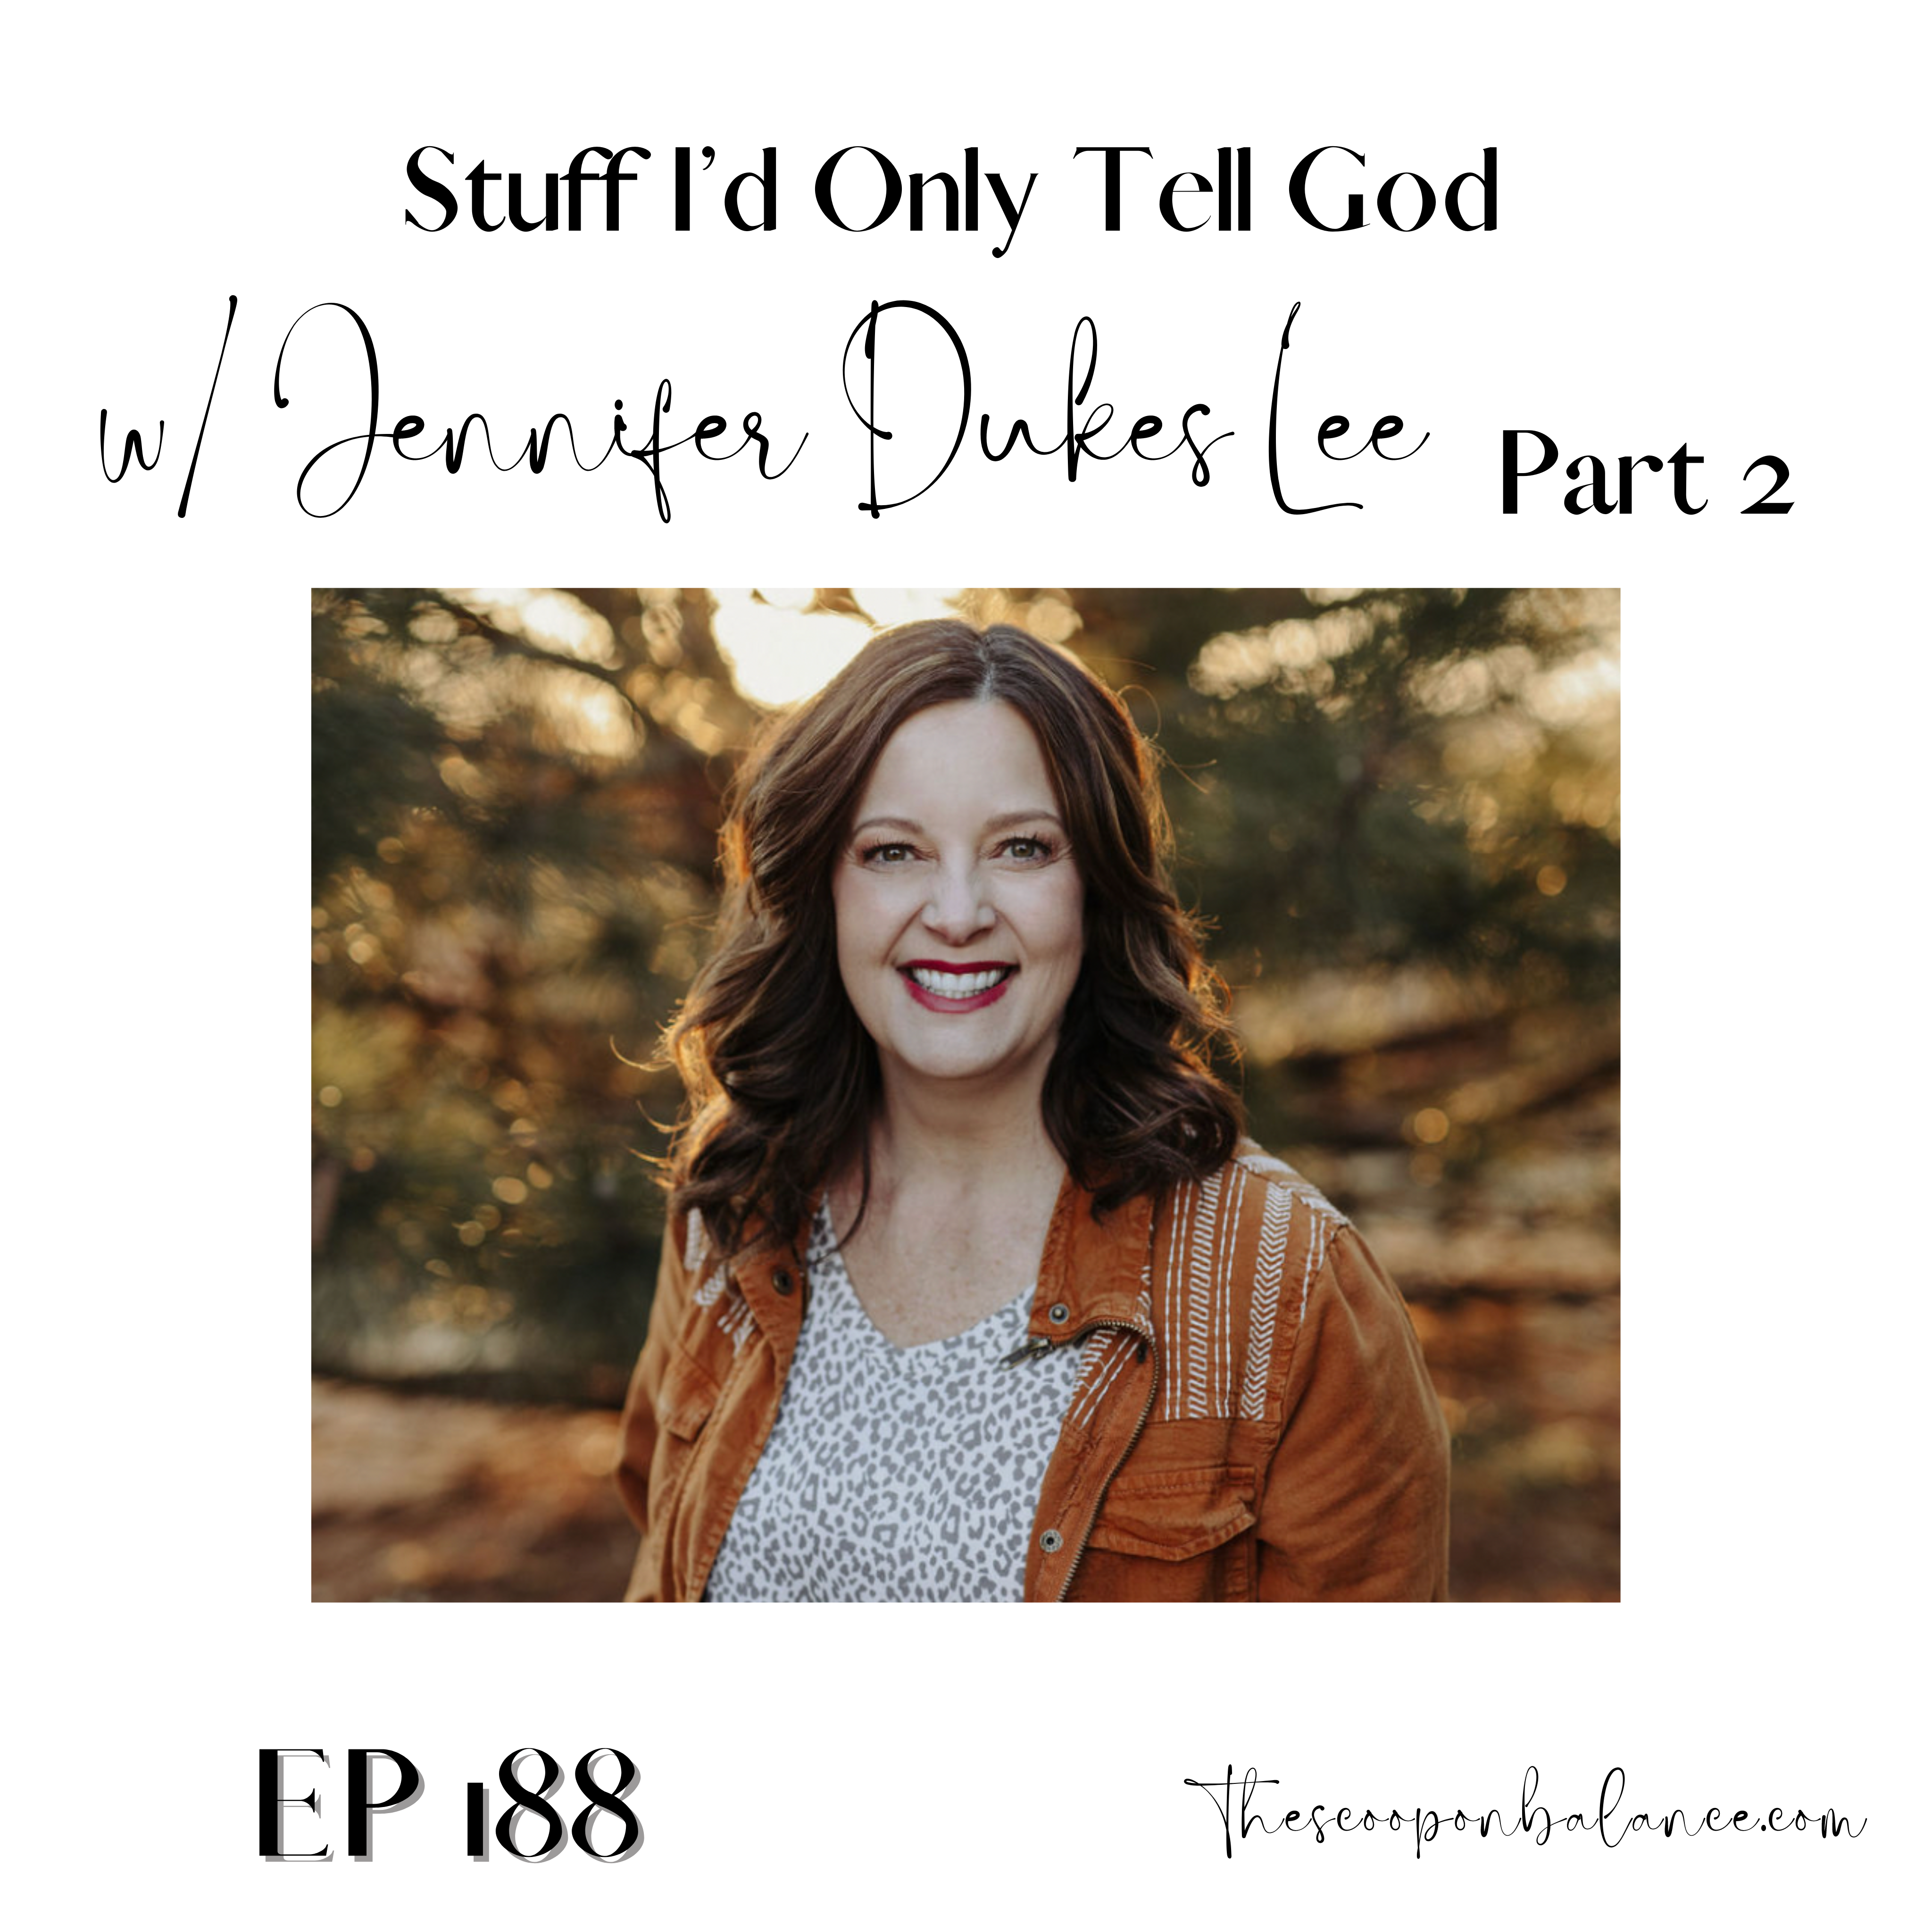 Ep 188: Stuff I’d Only Tell God with Jennifer Dukes Lee, Part 2